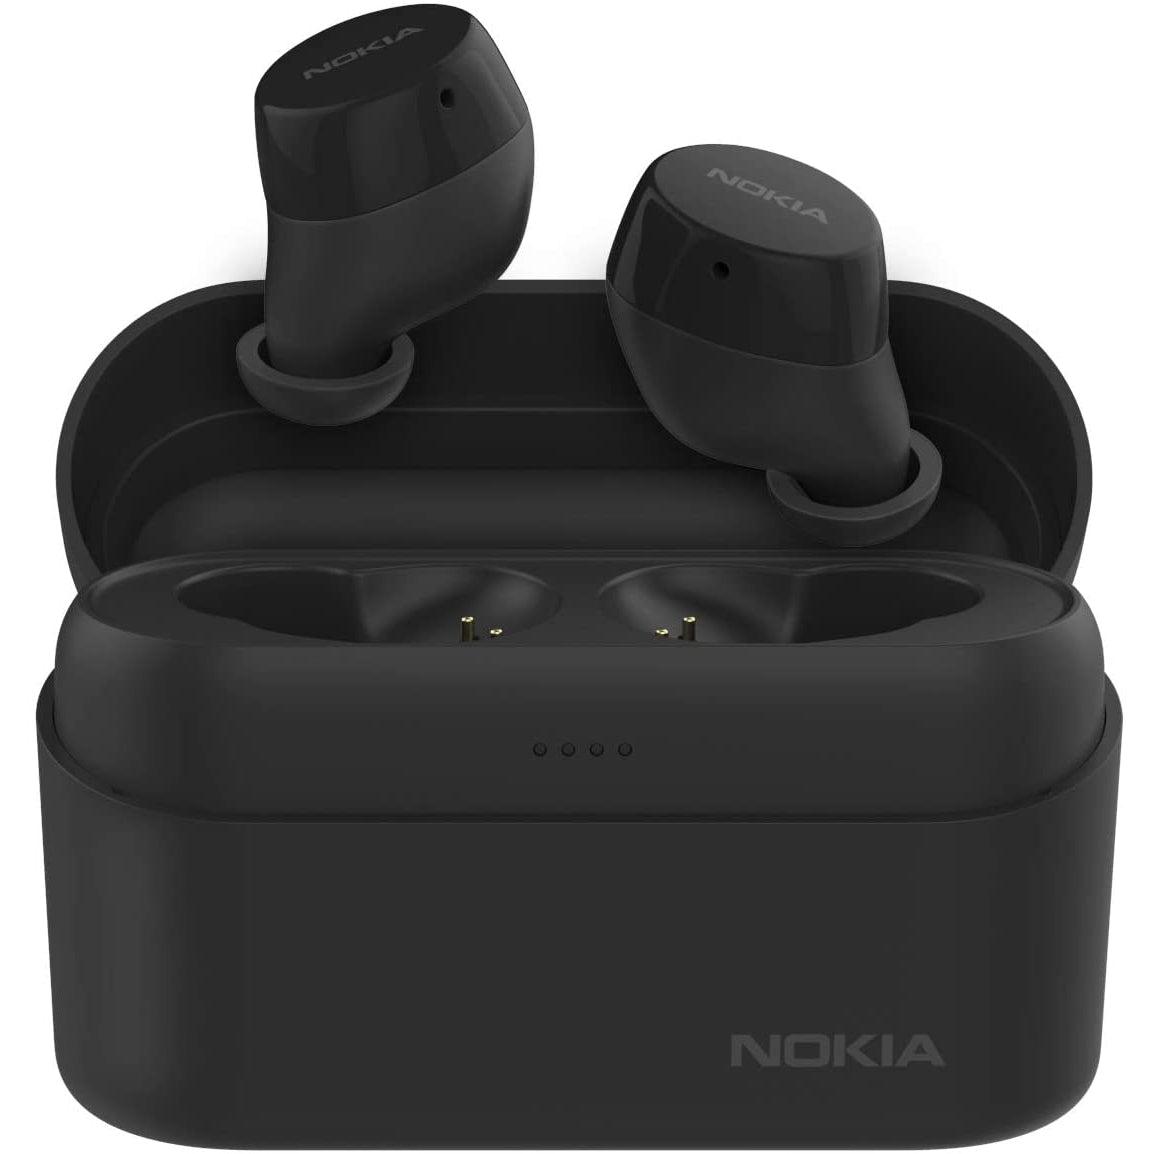 Nokia Power BH-605 Wireless Earbuds with Bluetooth, Black - Refurbished Pristine